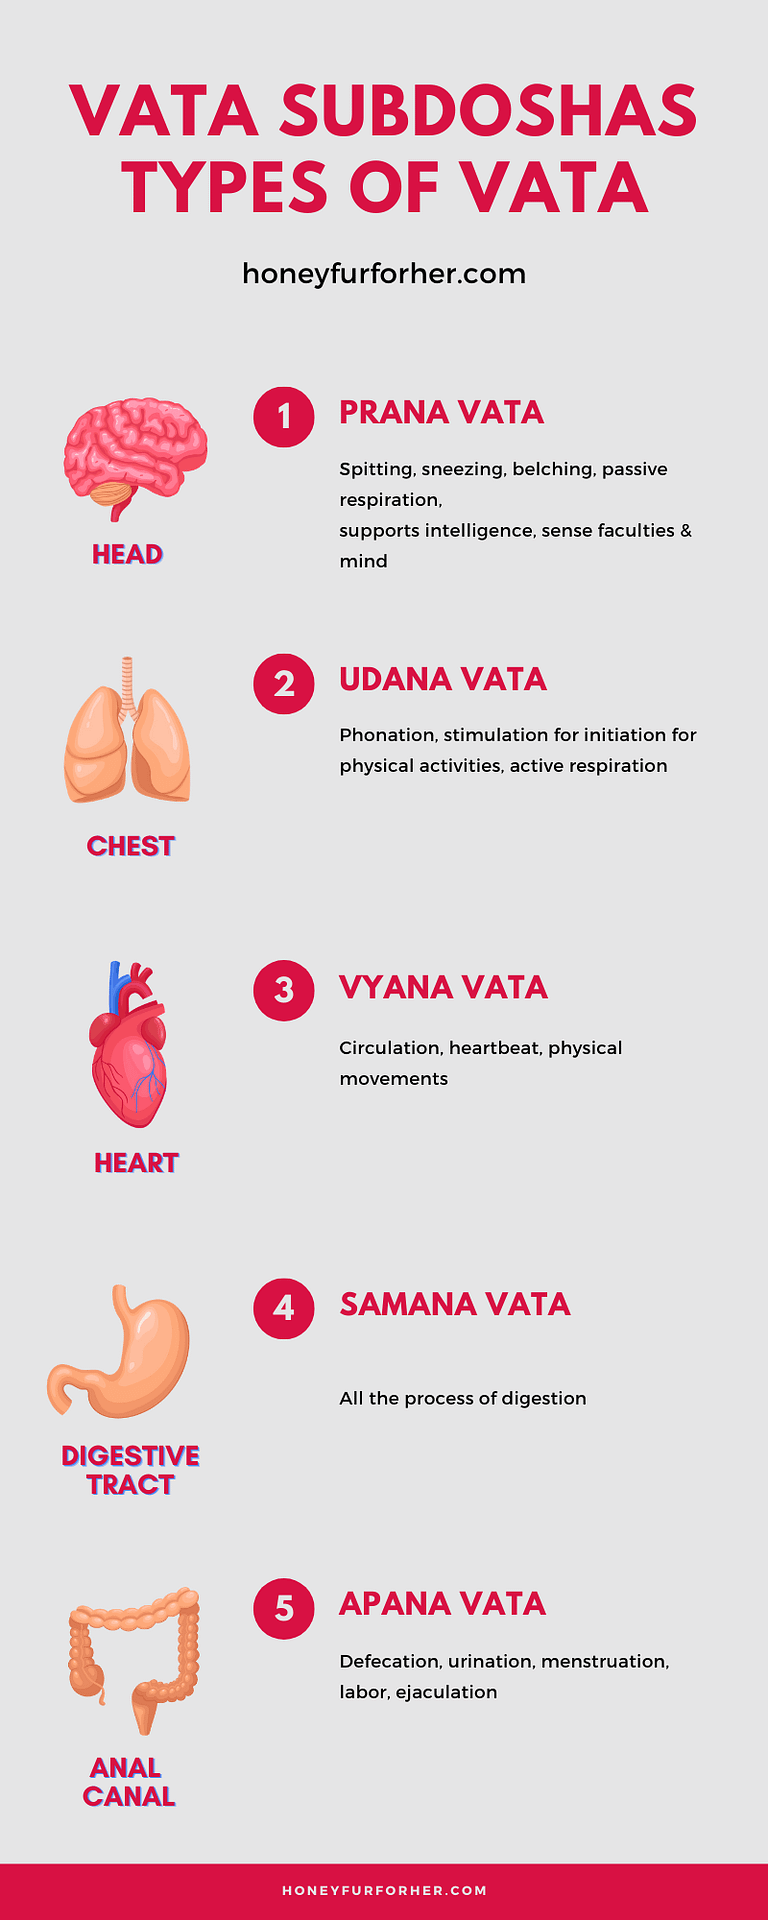 Type of Vata In Human Body